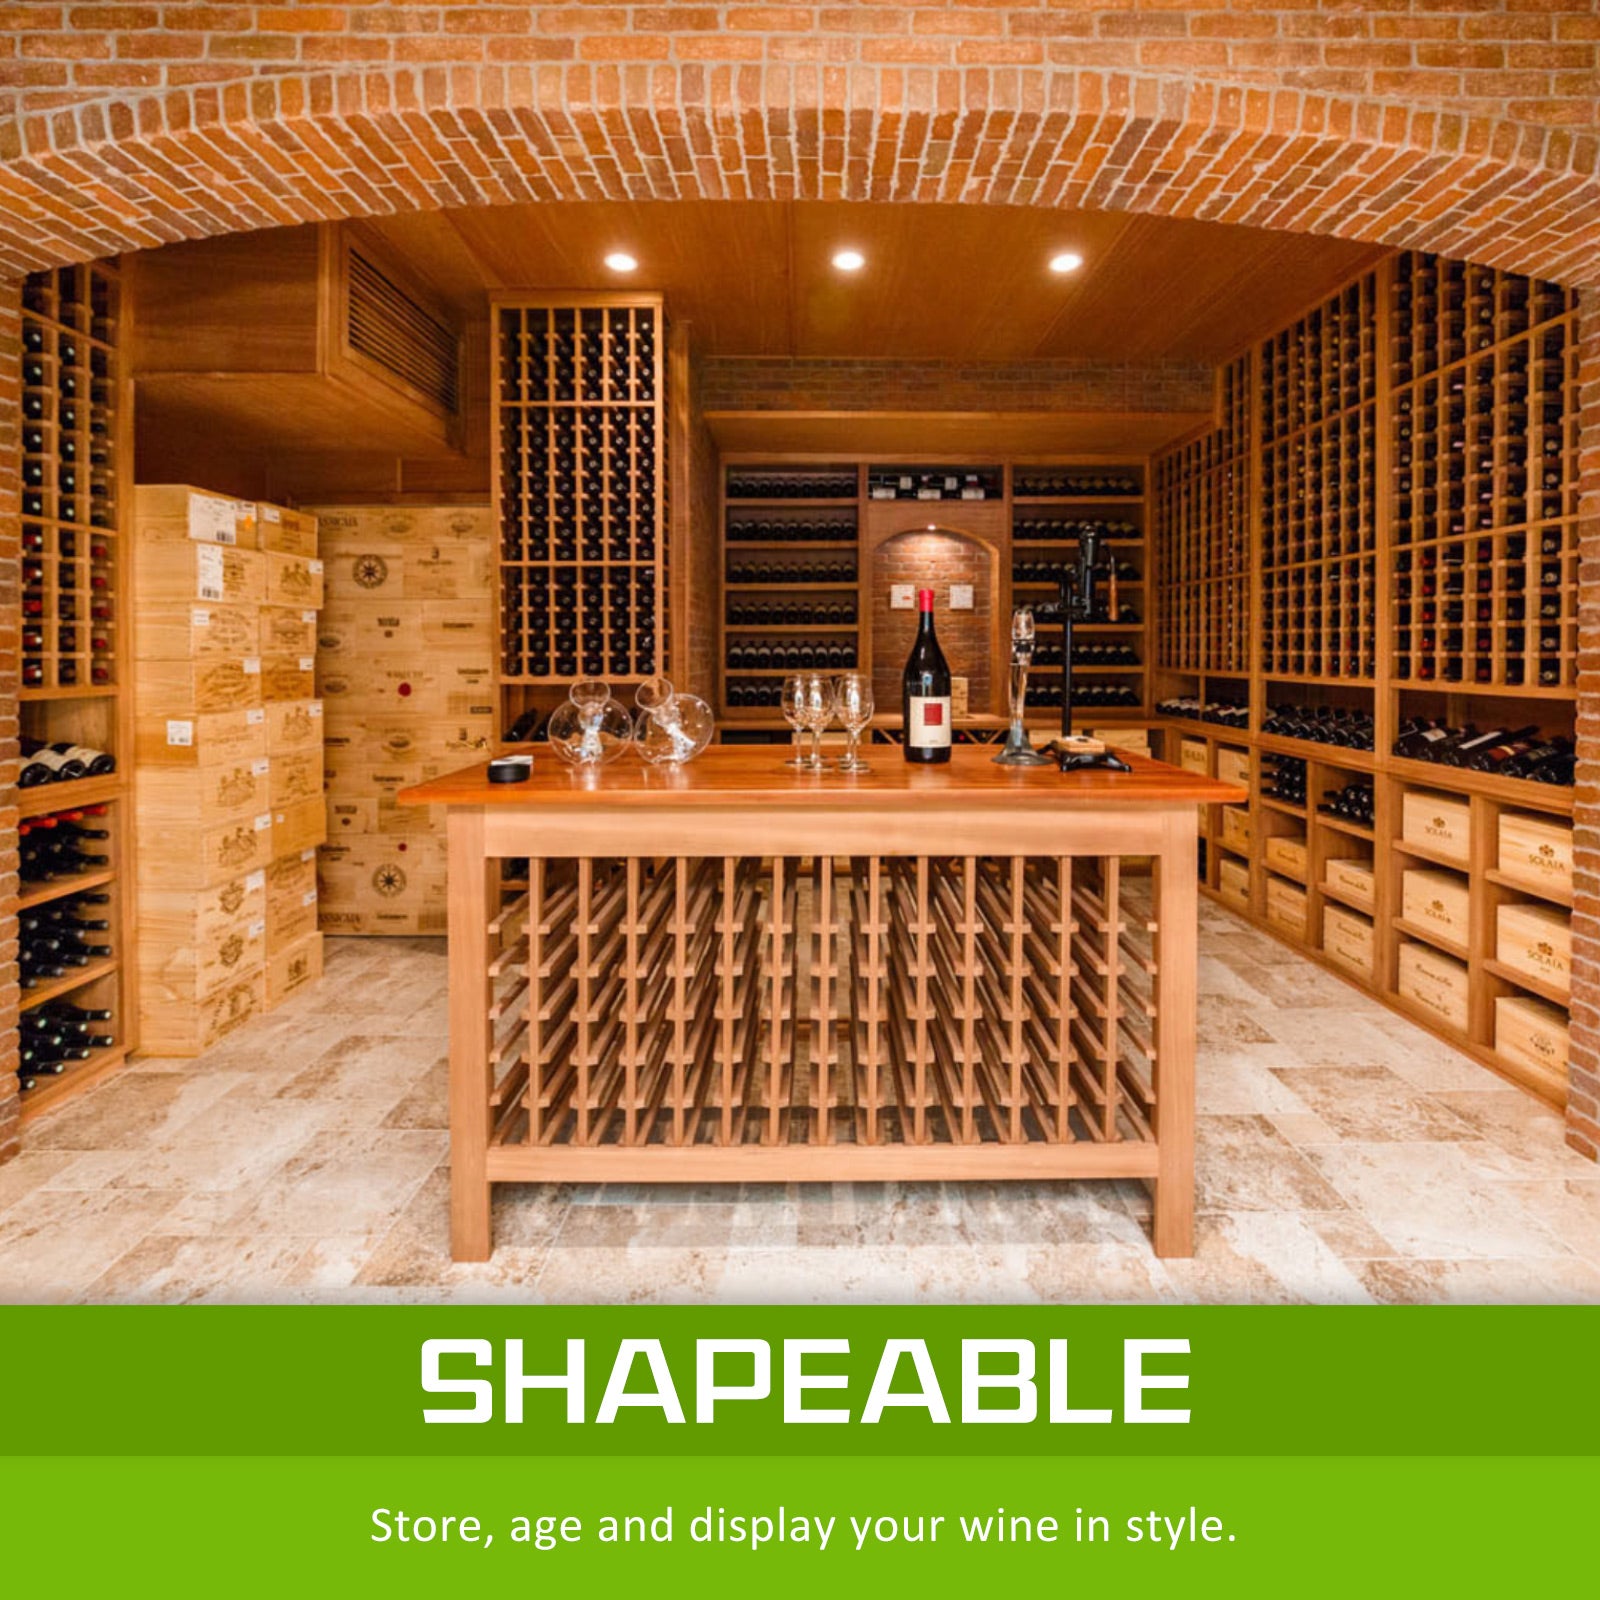 12 20 24 42 72 110 120 Bottle Timber Red Wine Rack Wooden Storage Cellar Display